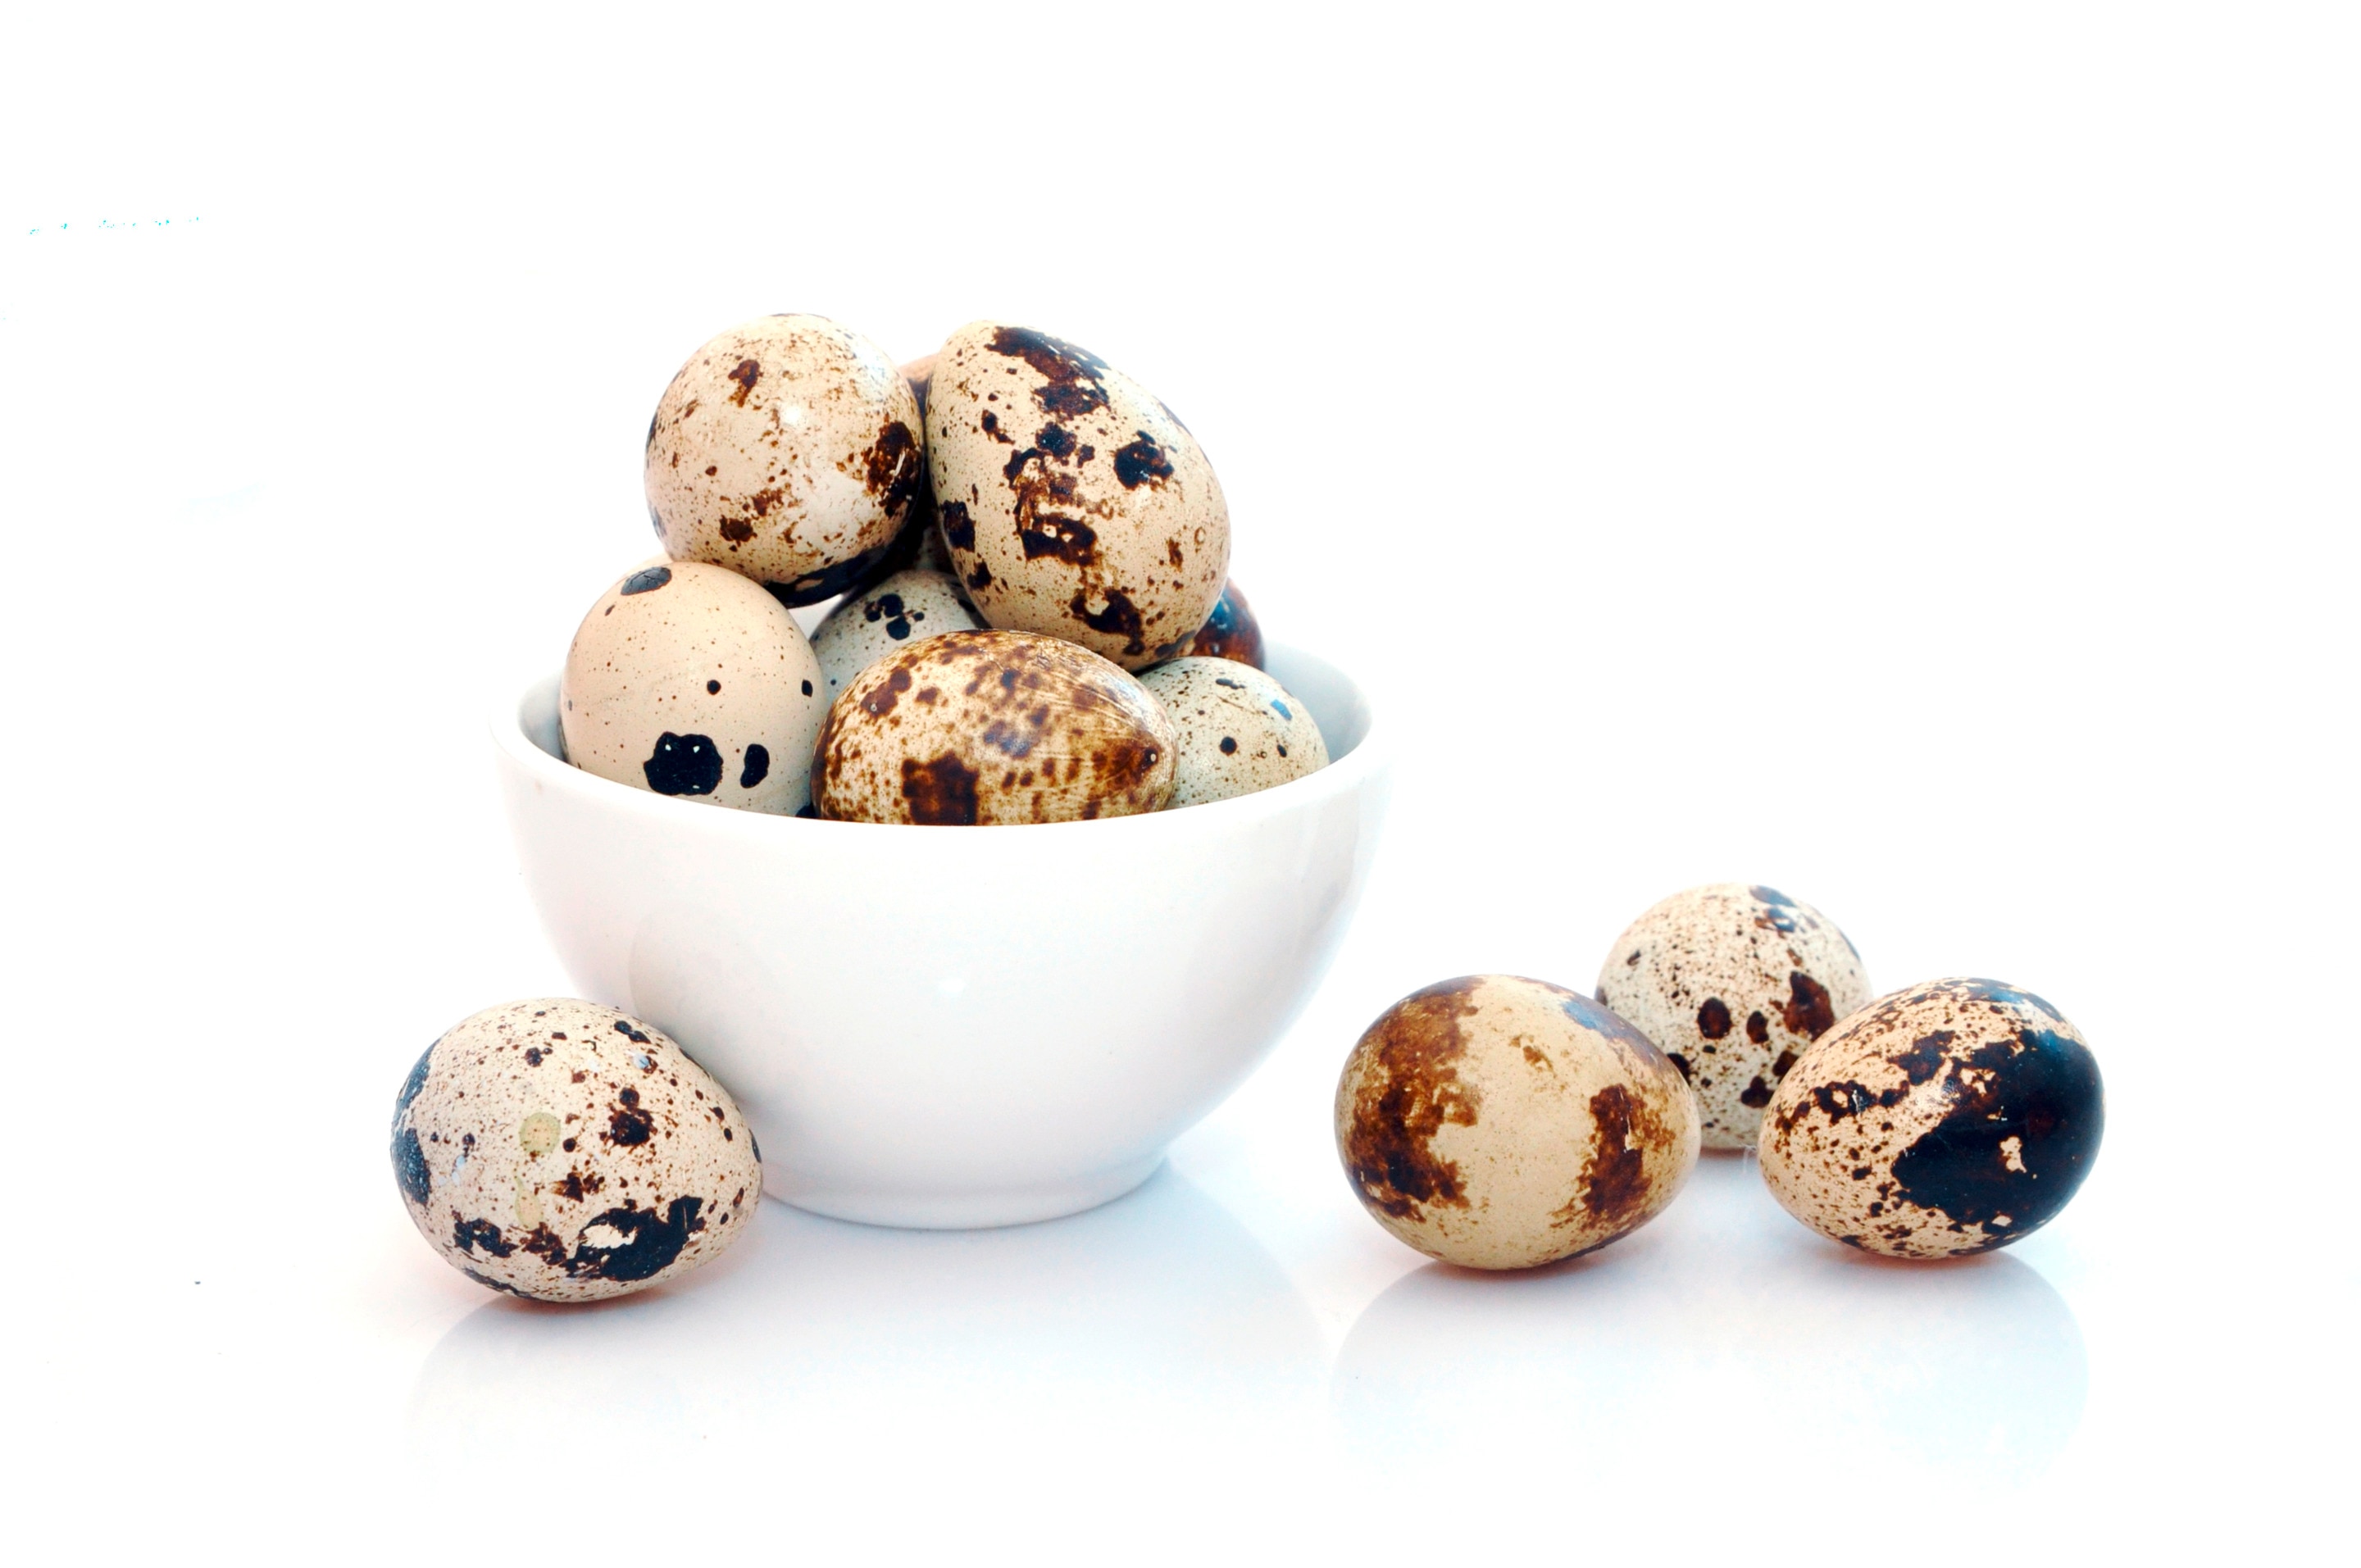 Quail eggs piled into a white bowl with quail eggs surrounding it